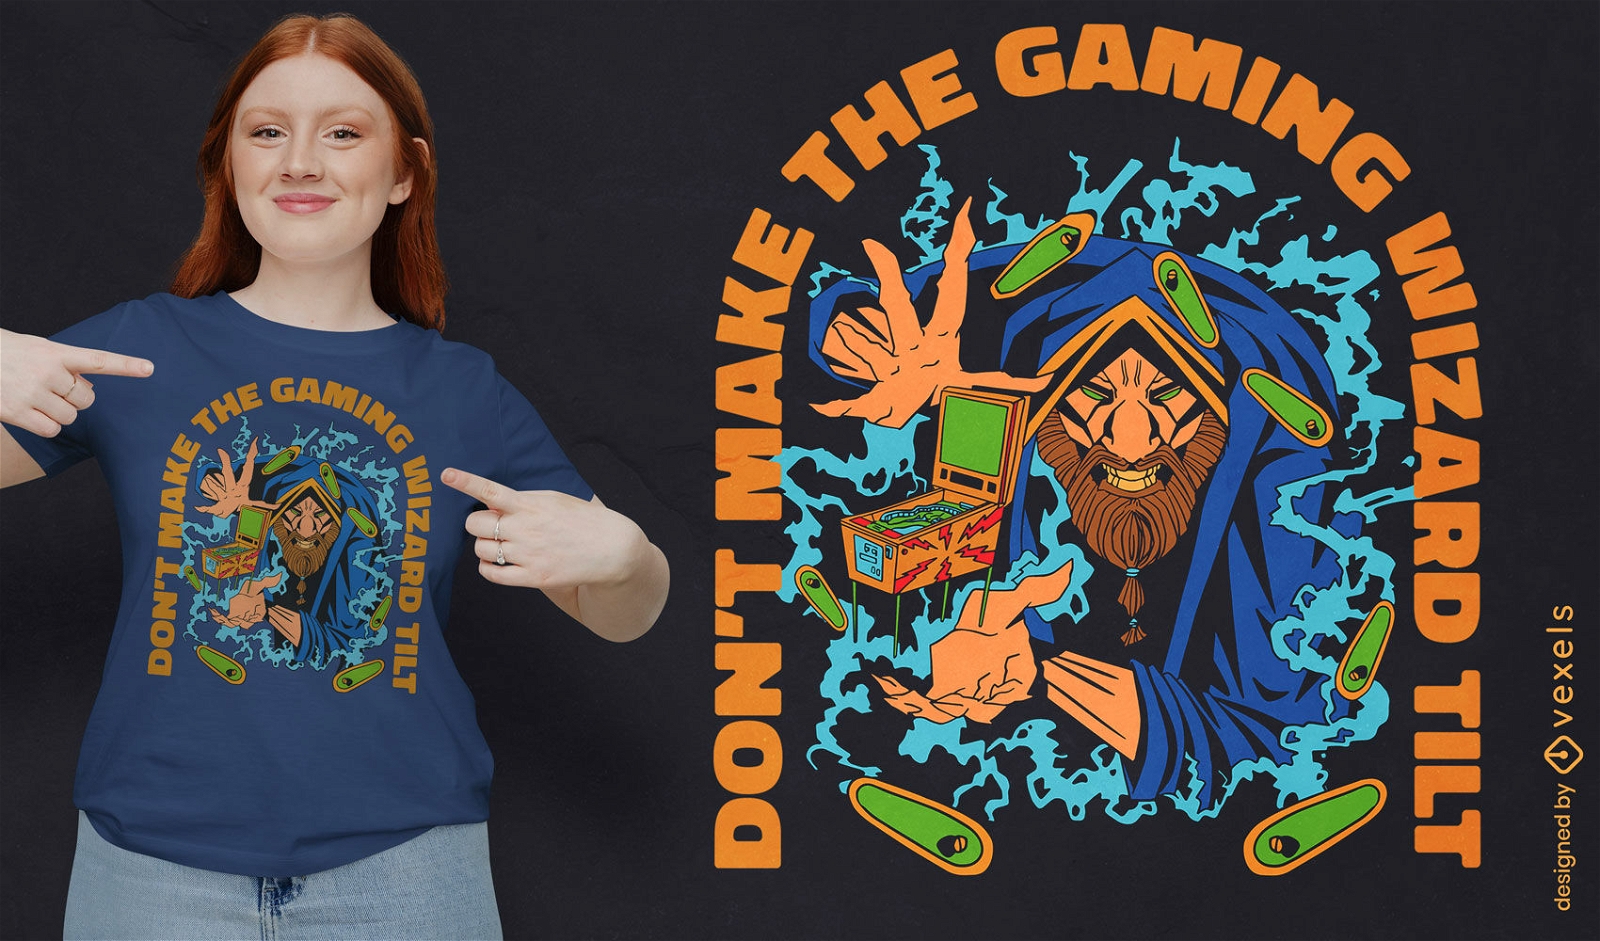 Wizard with gaming machine t-shirt design